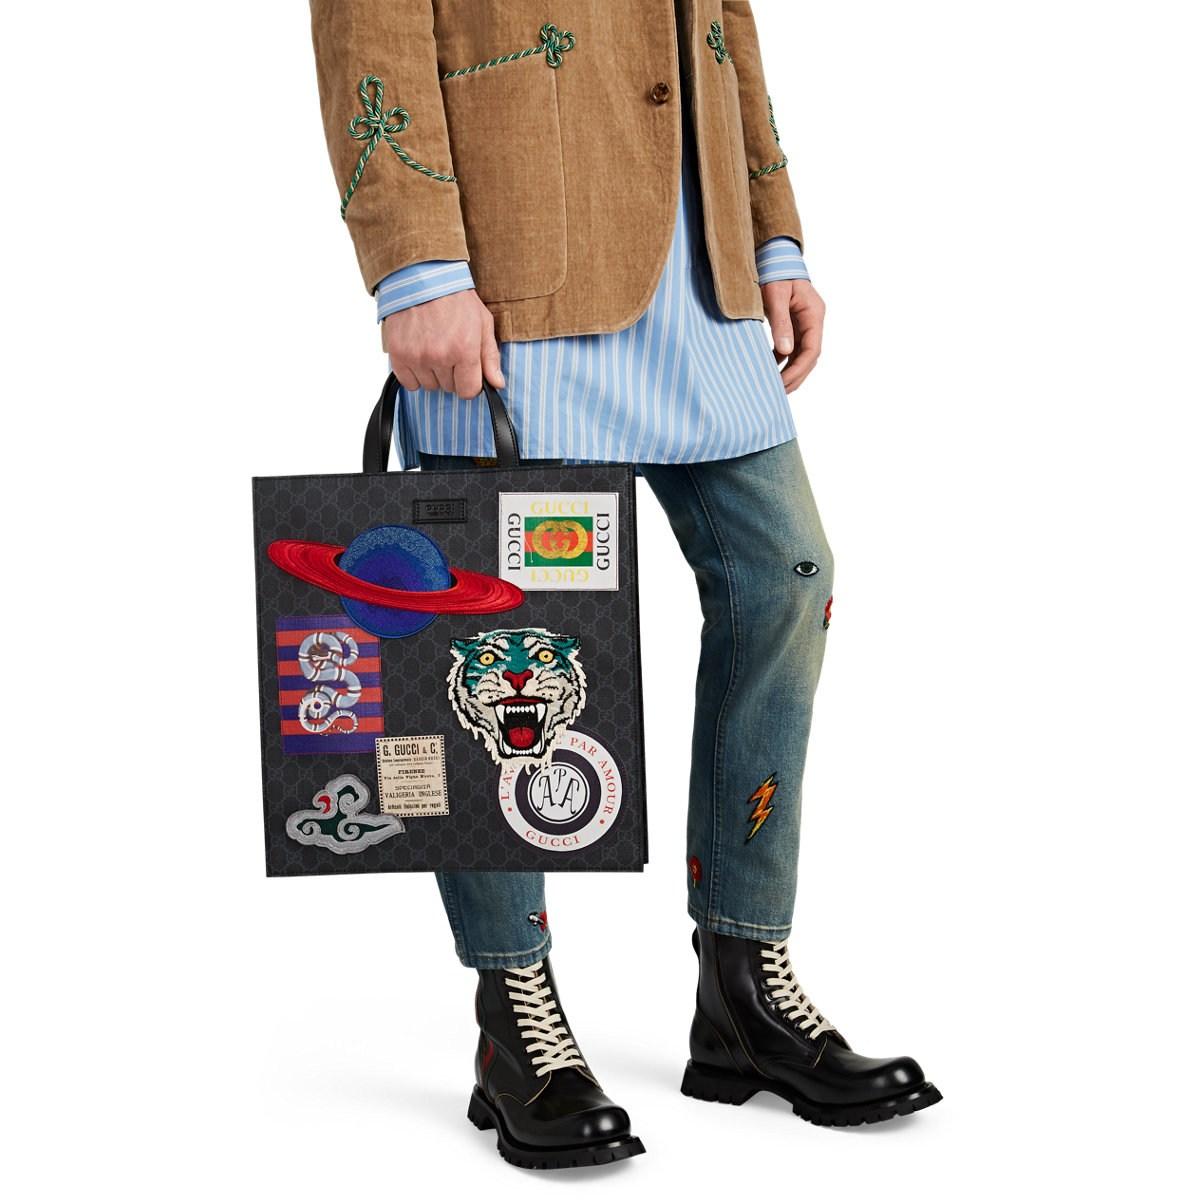 Gucci Appliquéd GG Supreme Canvas Shopper Tote Bag in Black for Men - Lyst